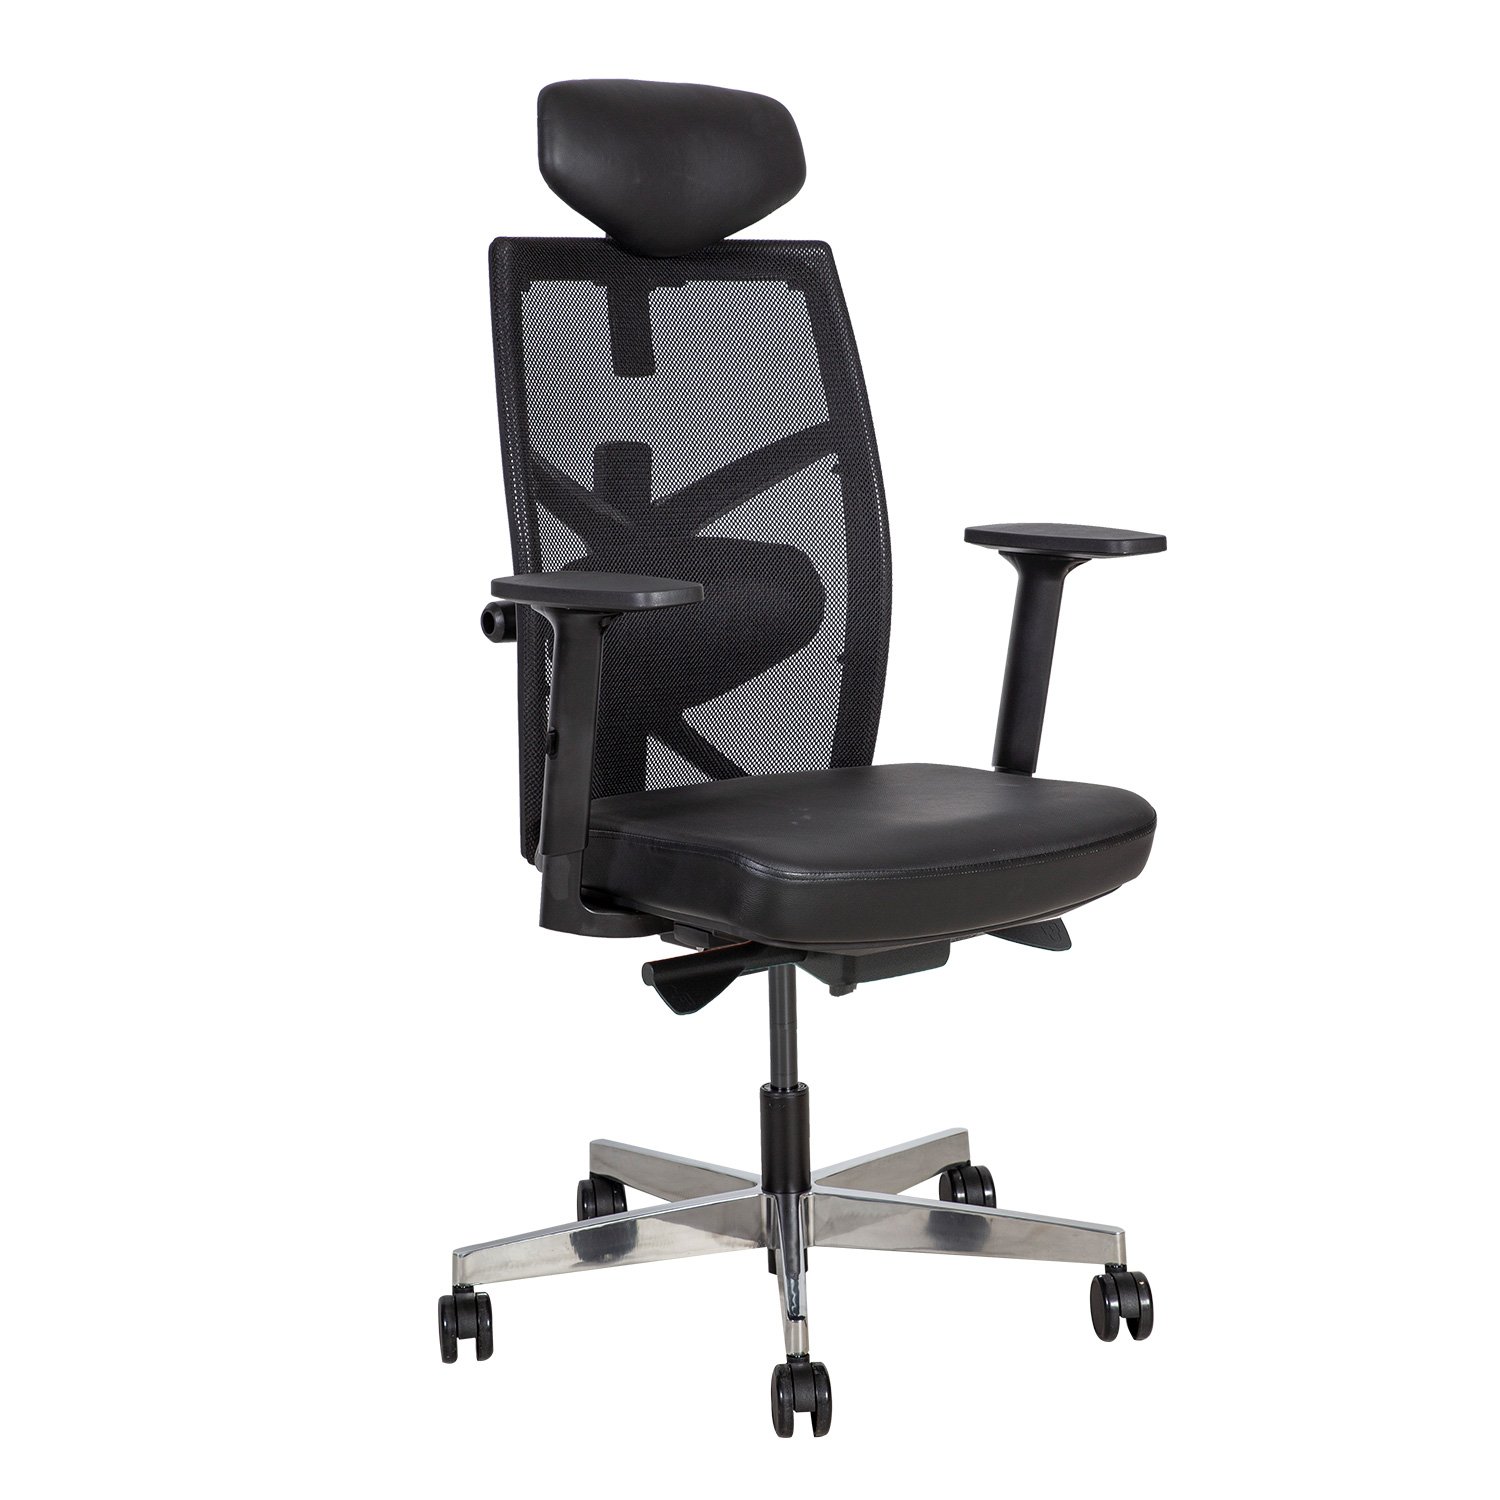 Biuro kėdė TUNE, 70x70x111-128 cm, juoda - 1